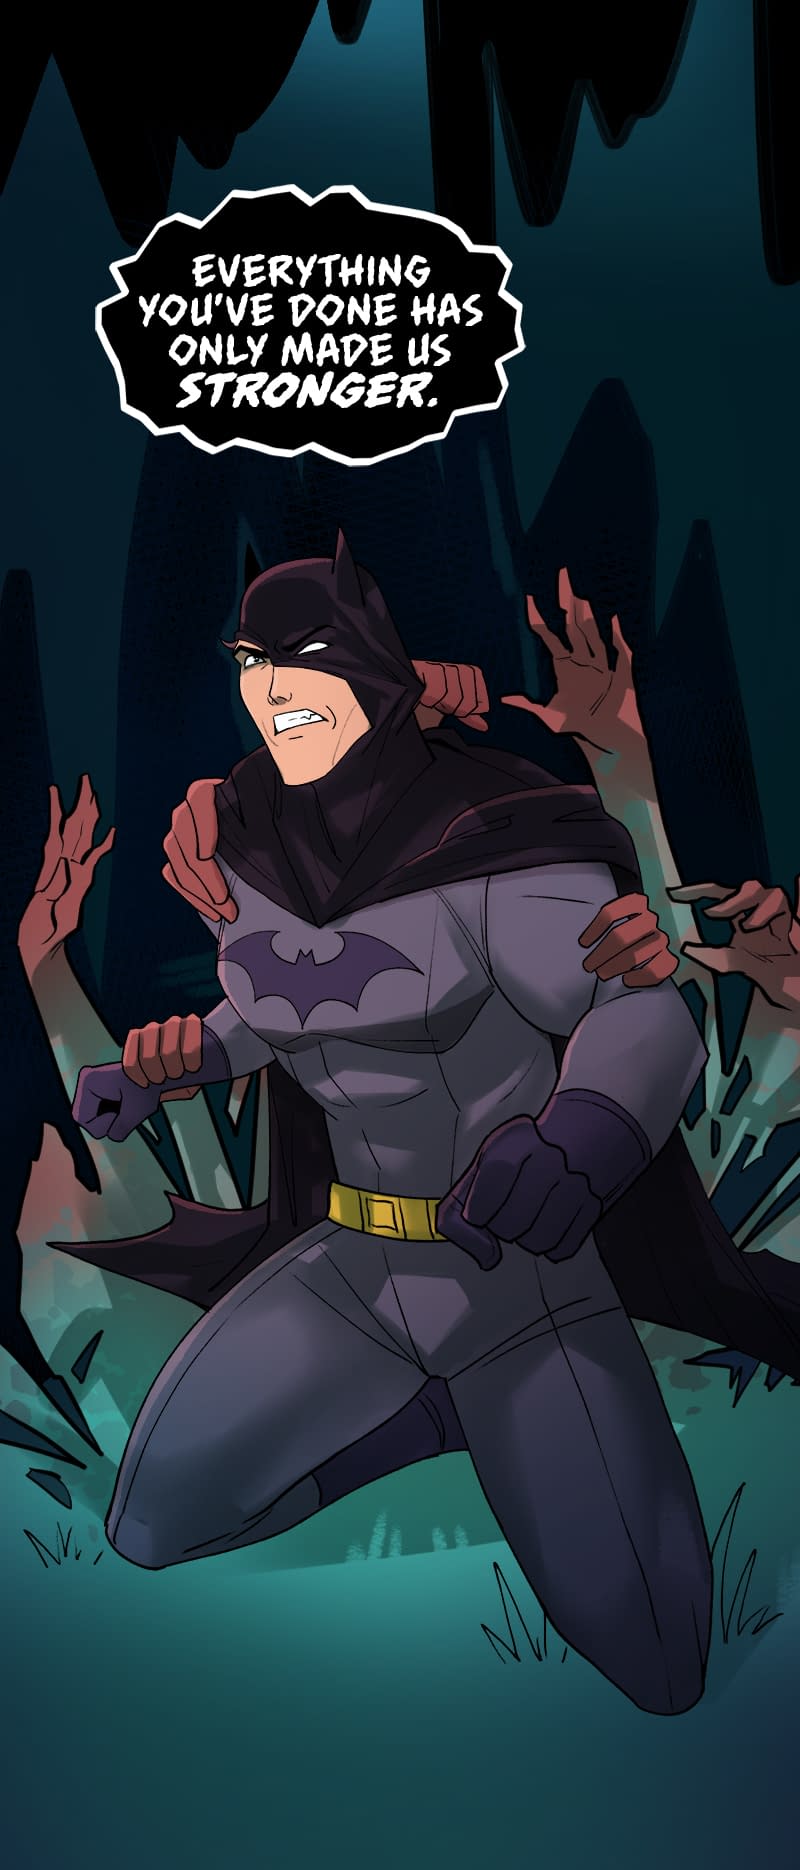 Webtoon reveals creative team & first look at BATMAN: WAYNE FAMILY